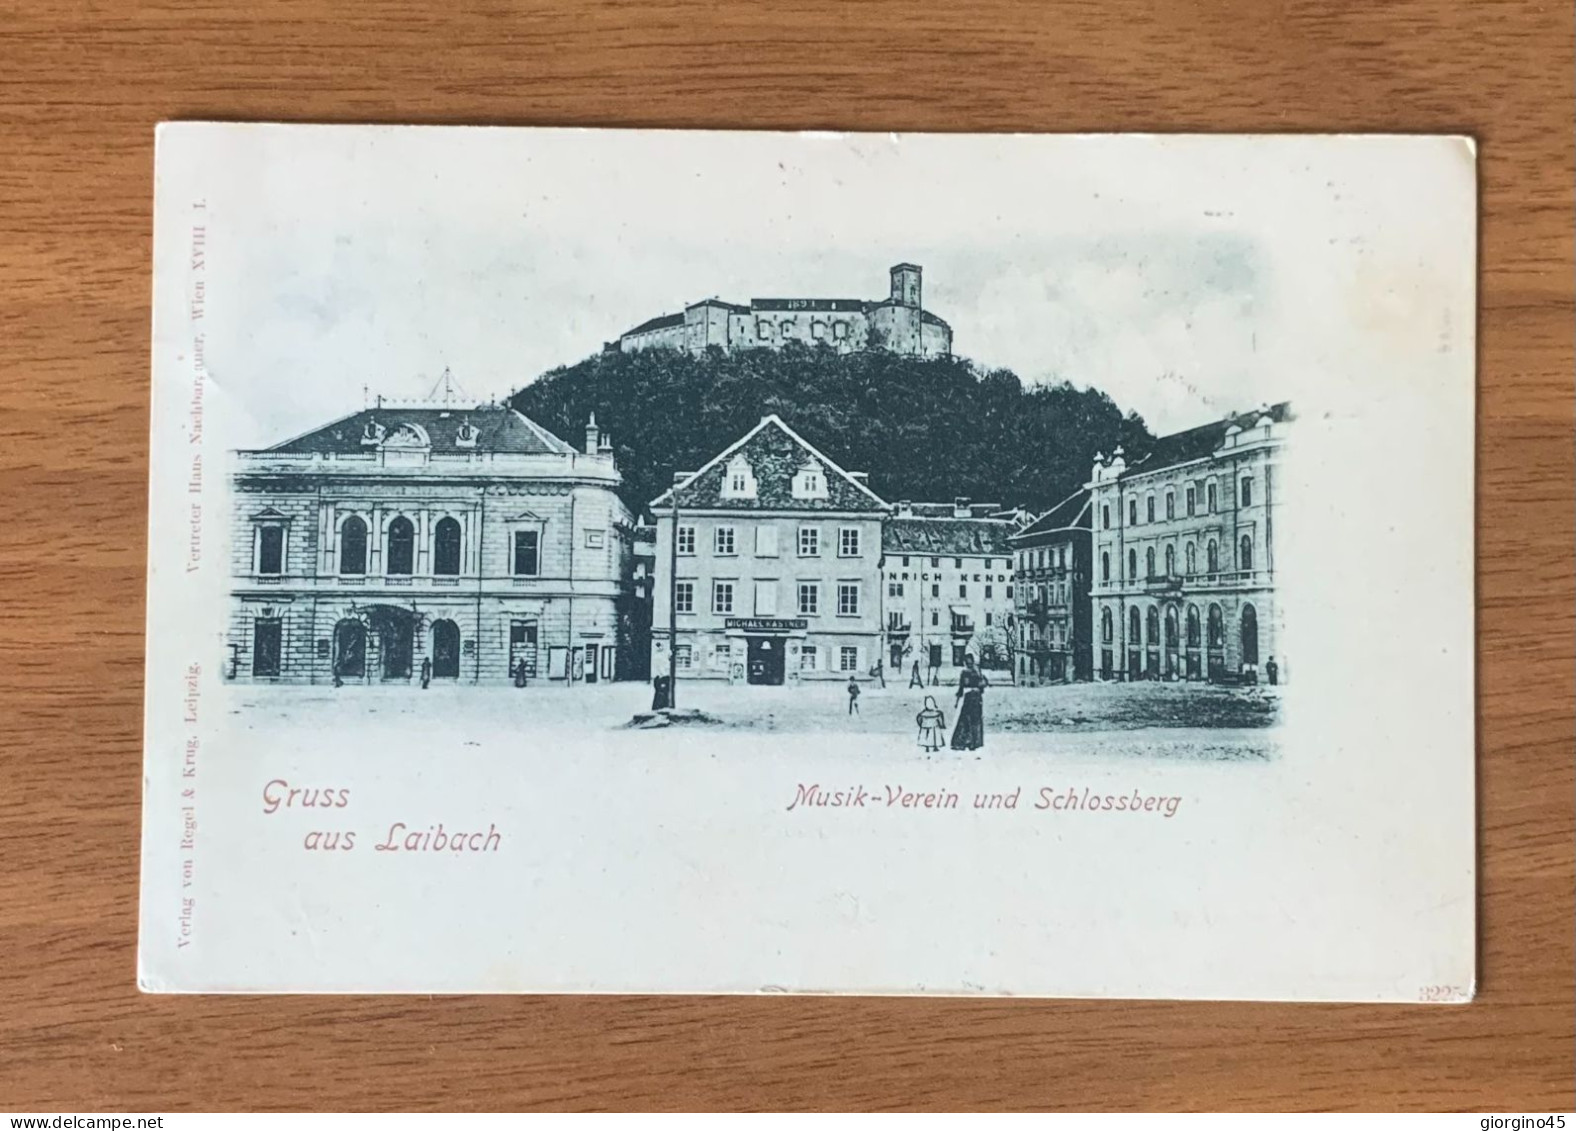 SLOVENIA / LJUBLJANA / LAIBACH / GRUSS AUSS LAIBACH / 1898 - Slowenien